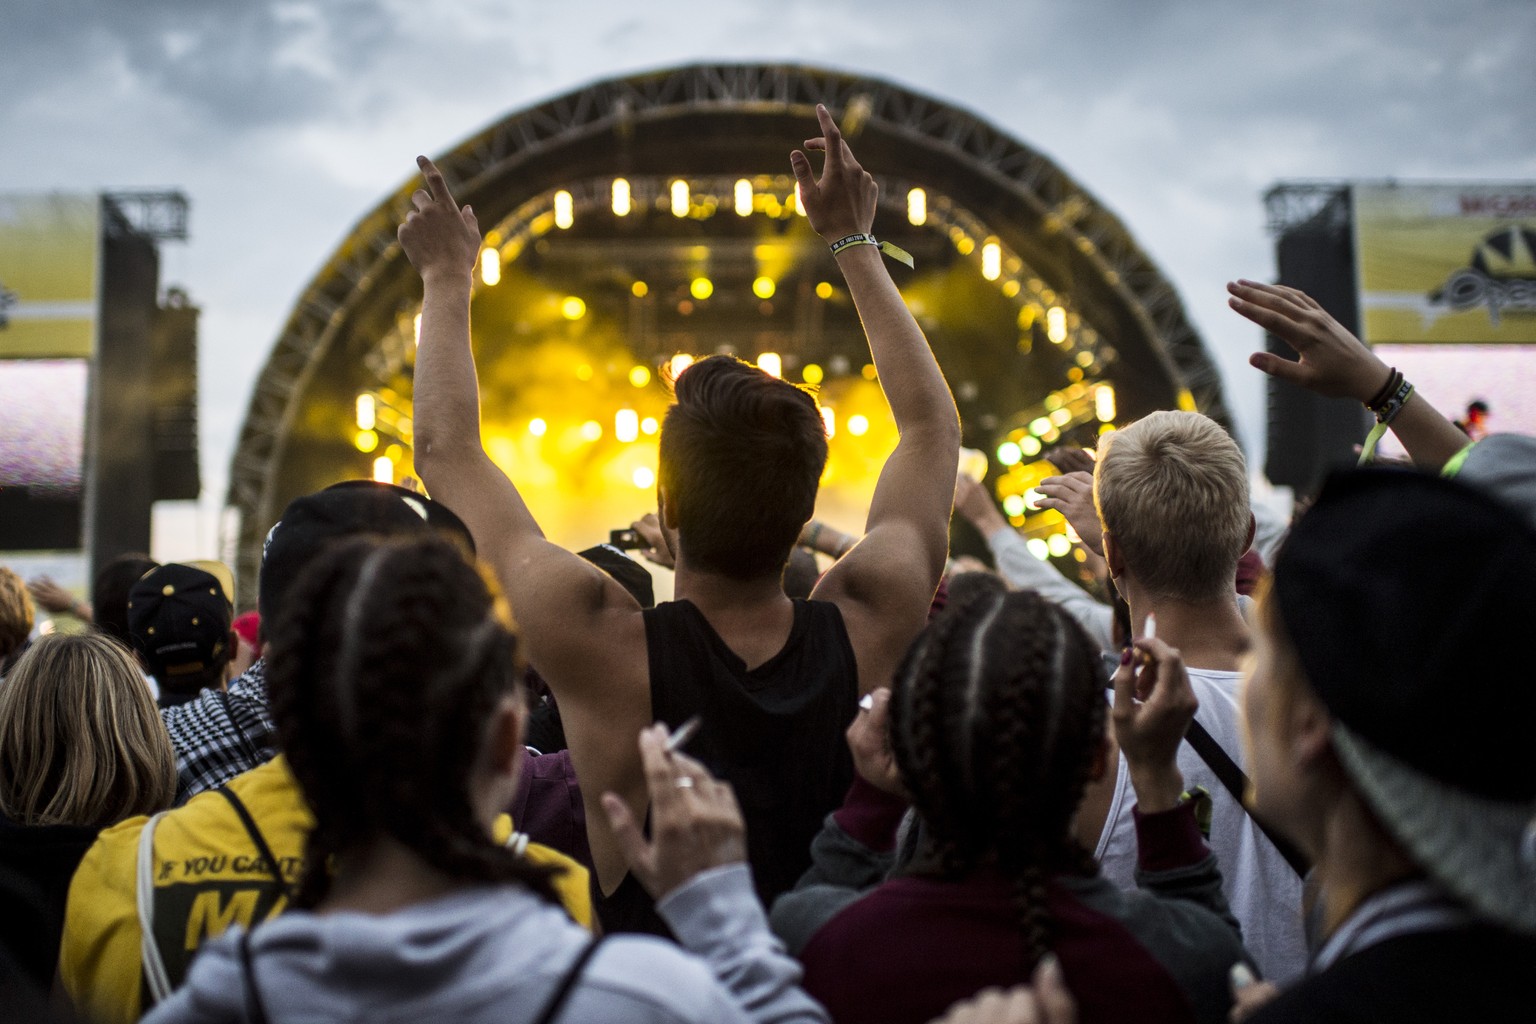 Festival-goers enjoy the performance of American rapper Cameron Jibril Thomaz, aka Wiz Khalifa, during the Openair Frauenfeld music festival in Frauenfeld, Switzerland, on Friday, July 11, 2014. The 2 ...